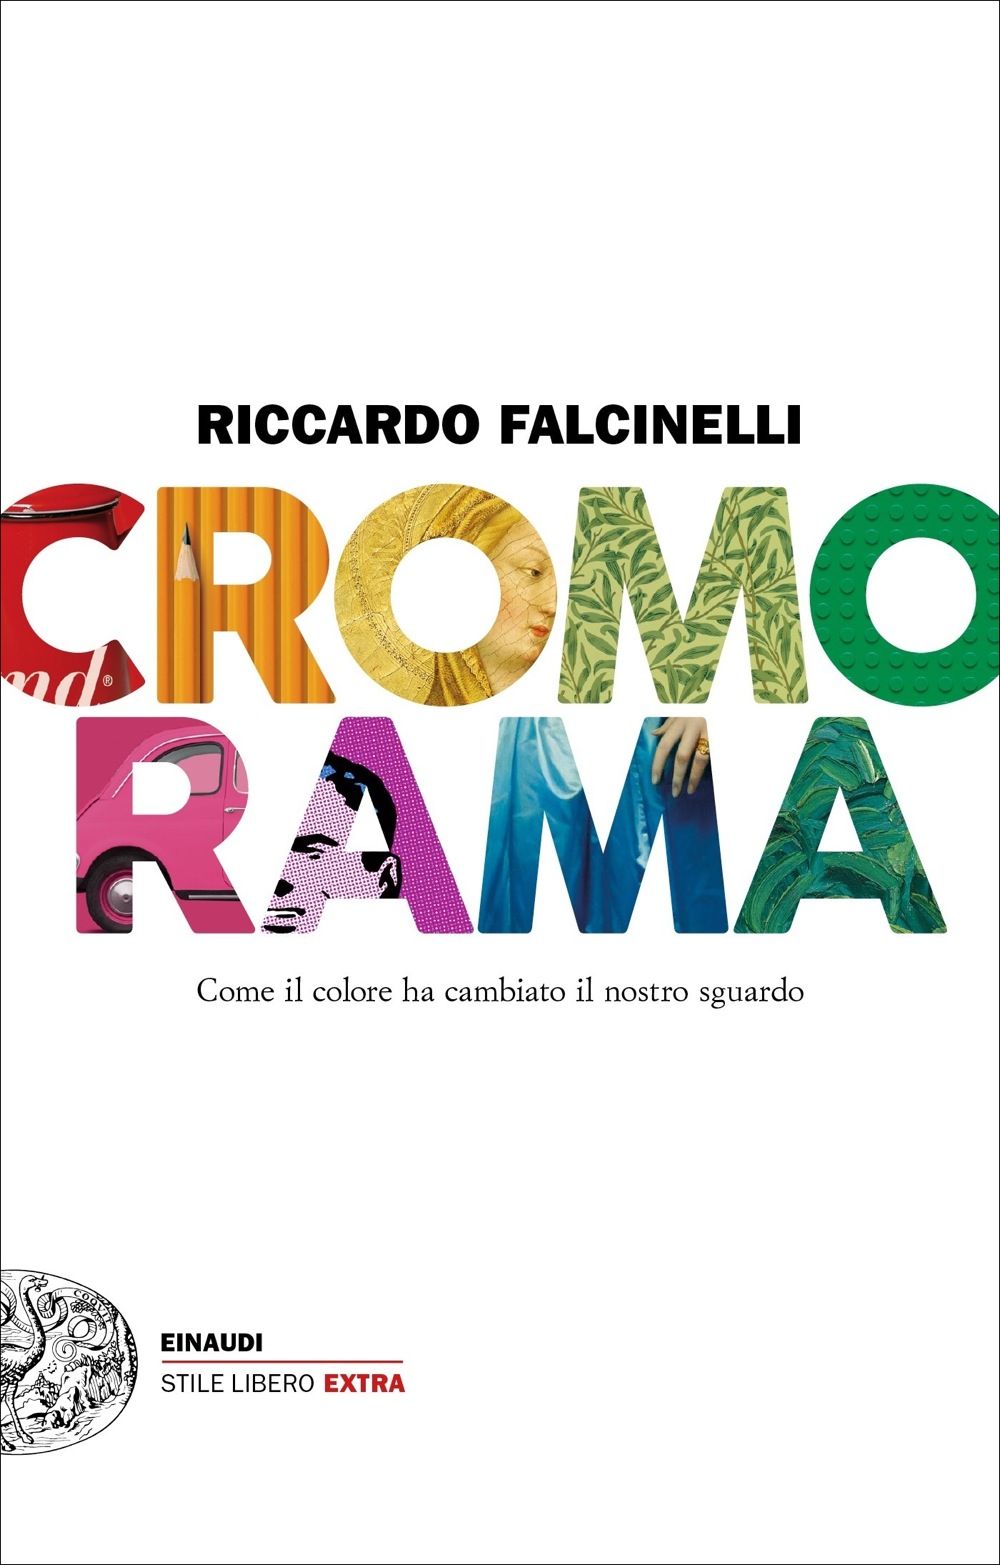 Cromorama, Riccardo Falcinelli. Giulio Einaudi editore - Stile libero Extra